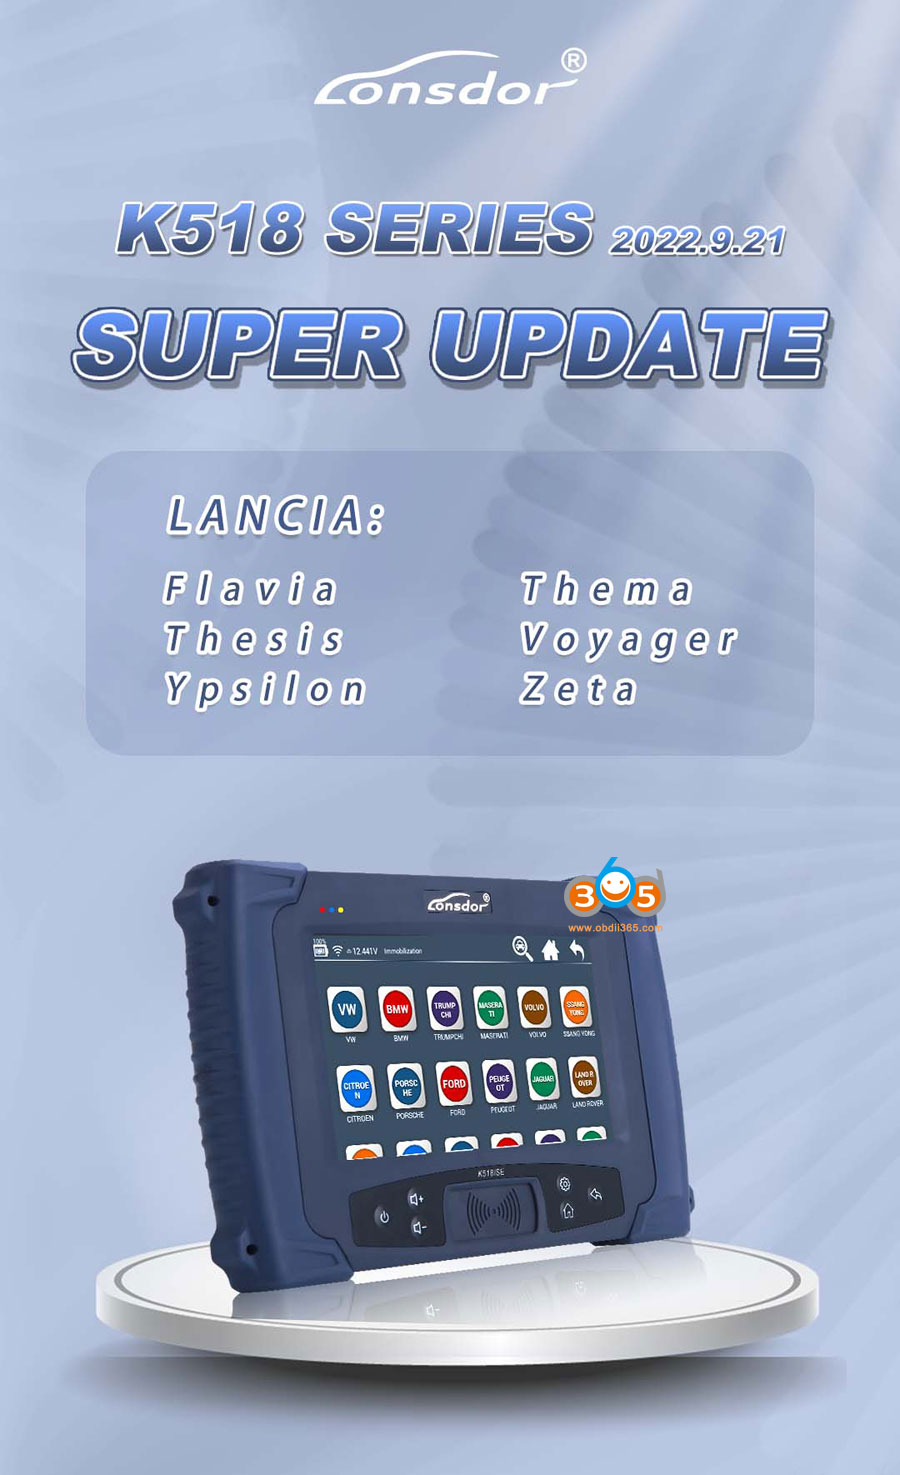 Lonsdor K518 series new update for Lancia